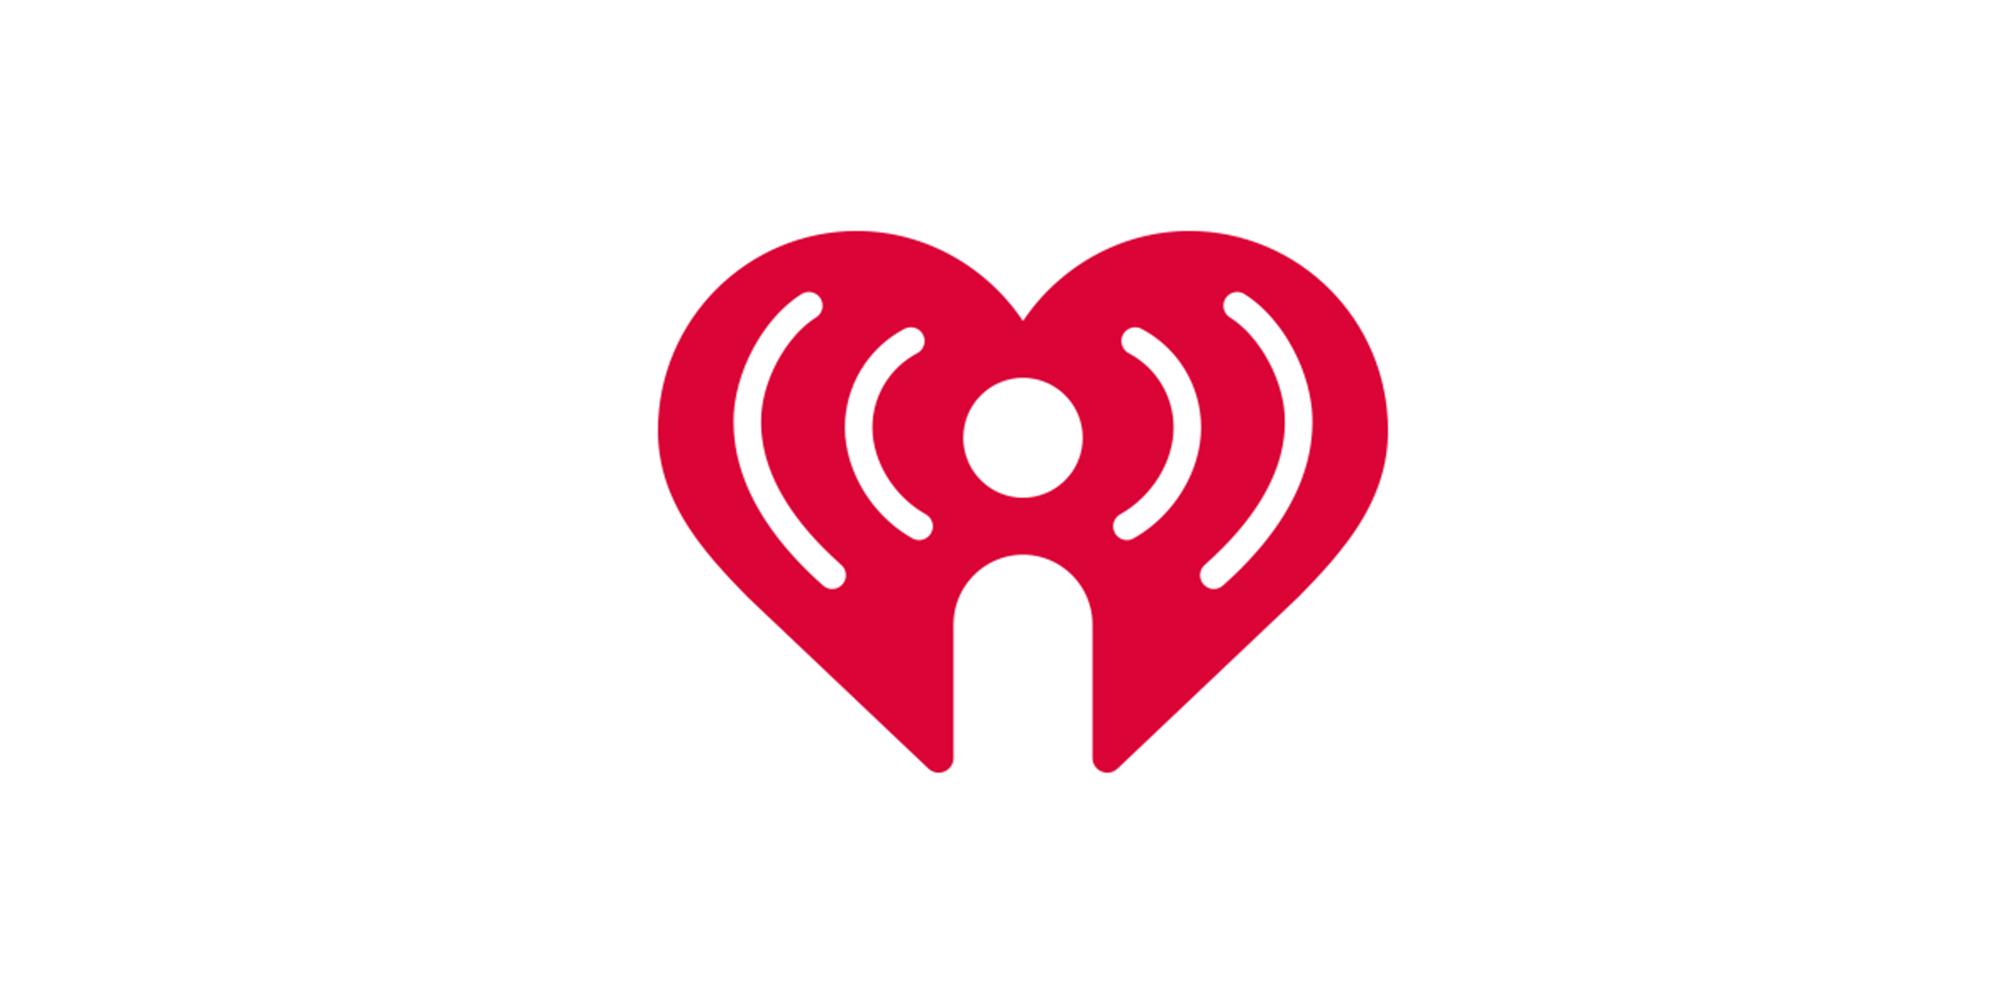 Iheart Logo - iHeartRadio Preparing for Bankruptcy (Report). Digital Media Wire